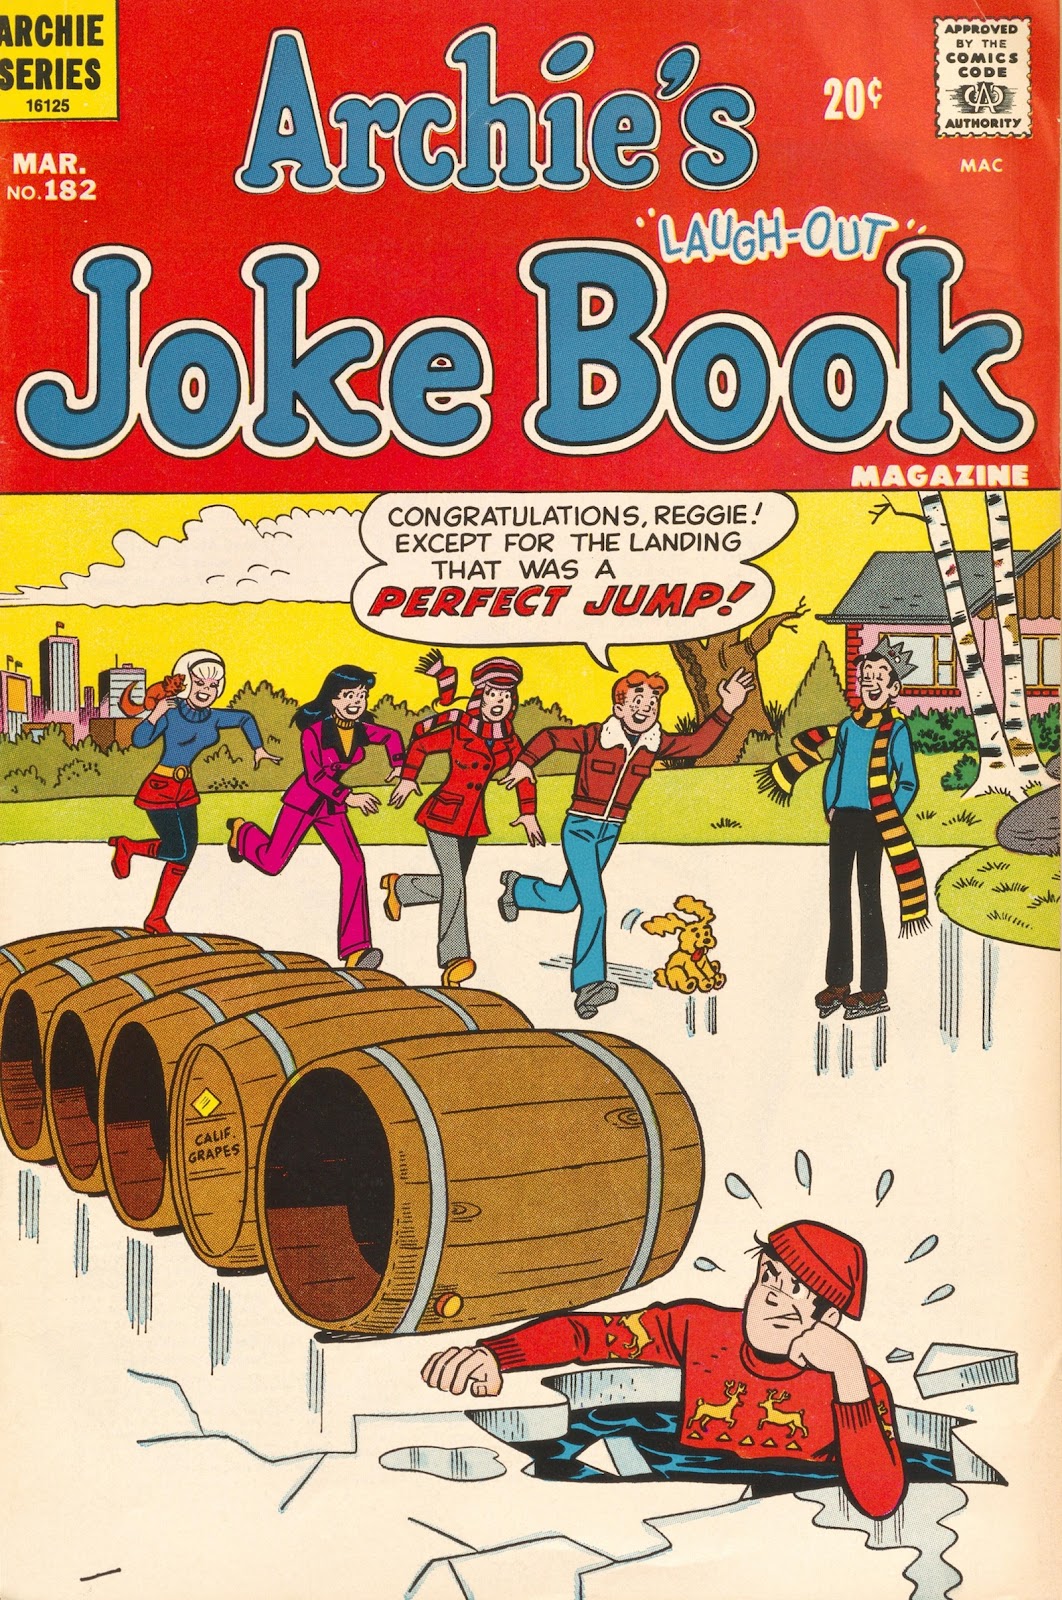 Archie's Joke Book Magazine issue 182 - Page 1